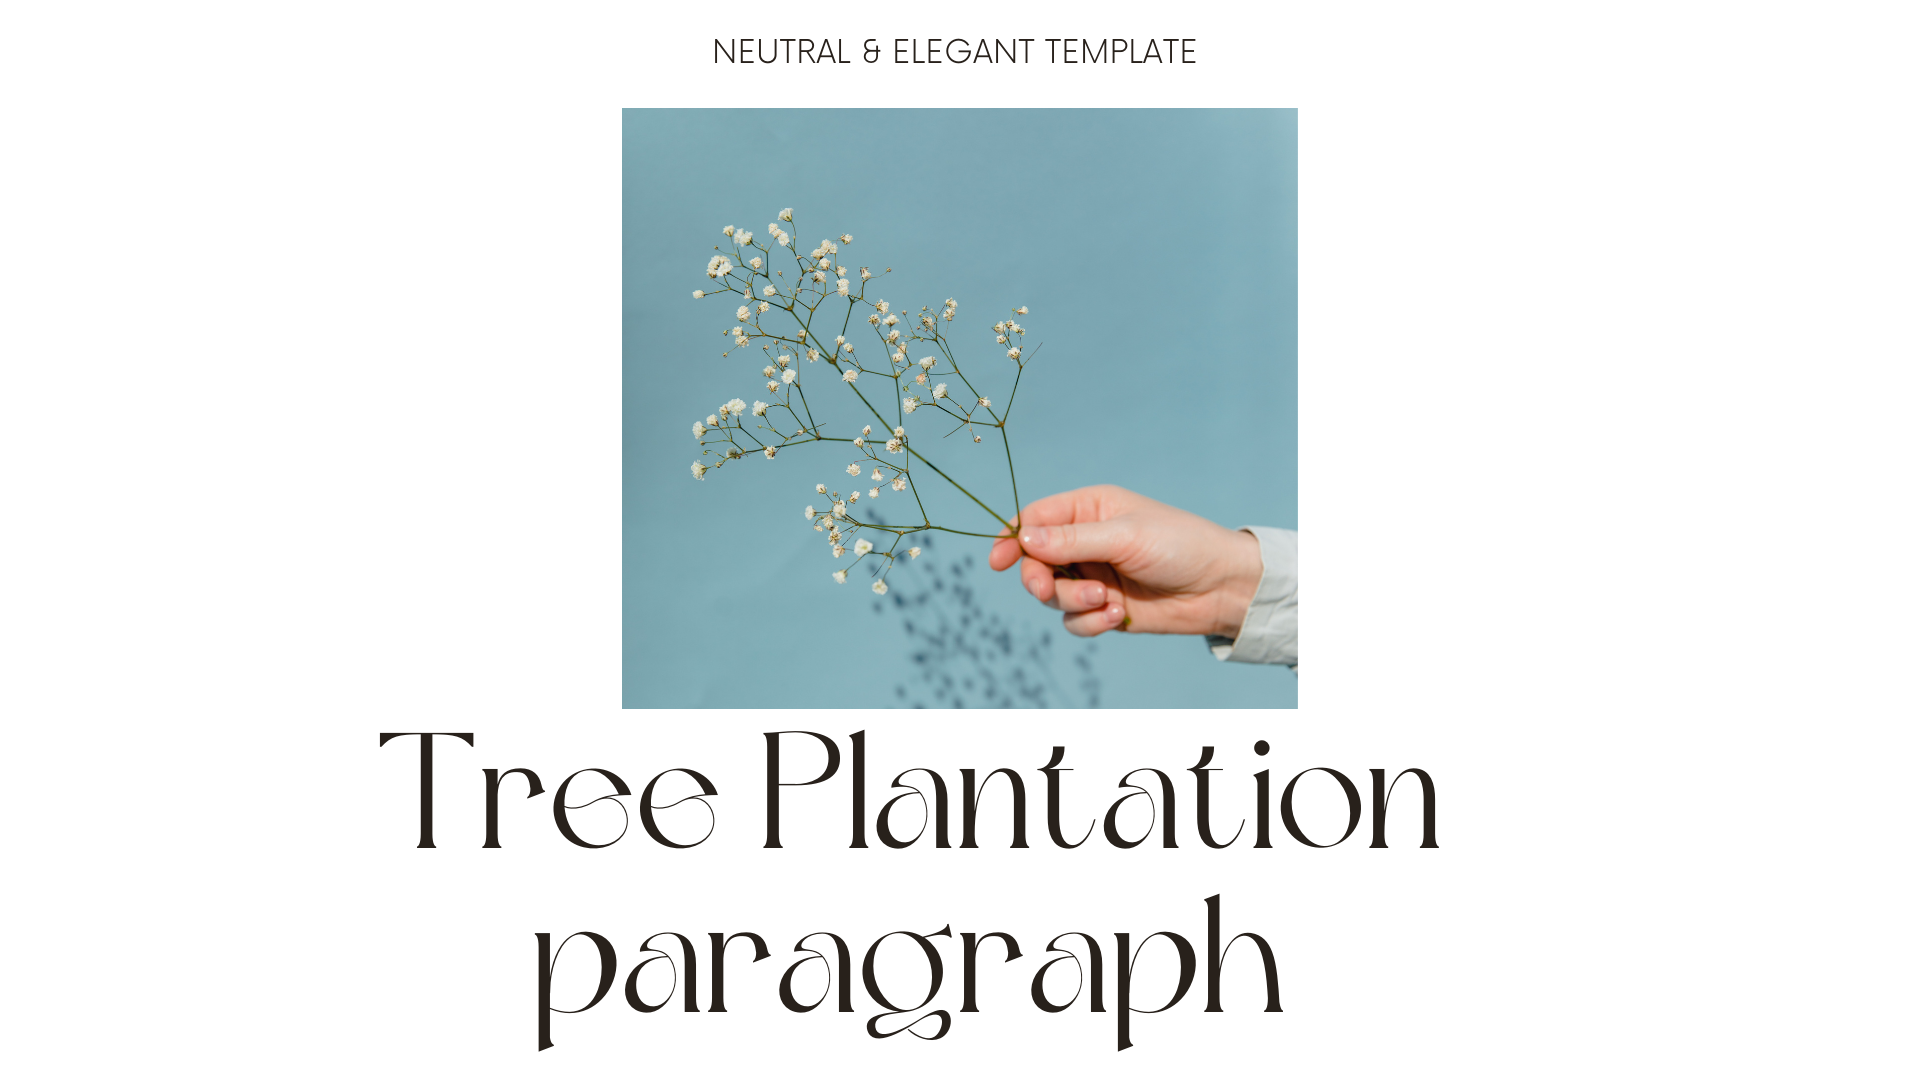 Tree Plantation paragraph